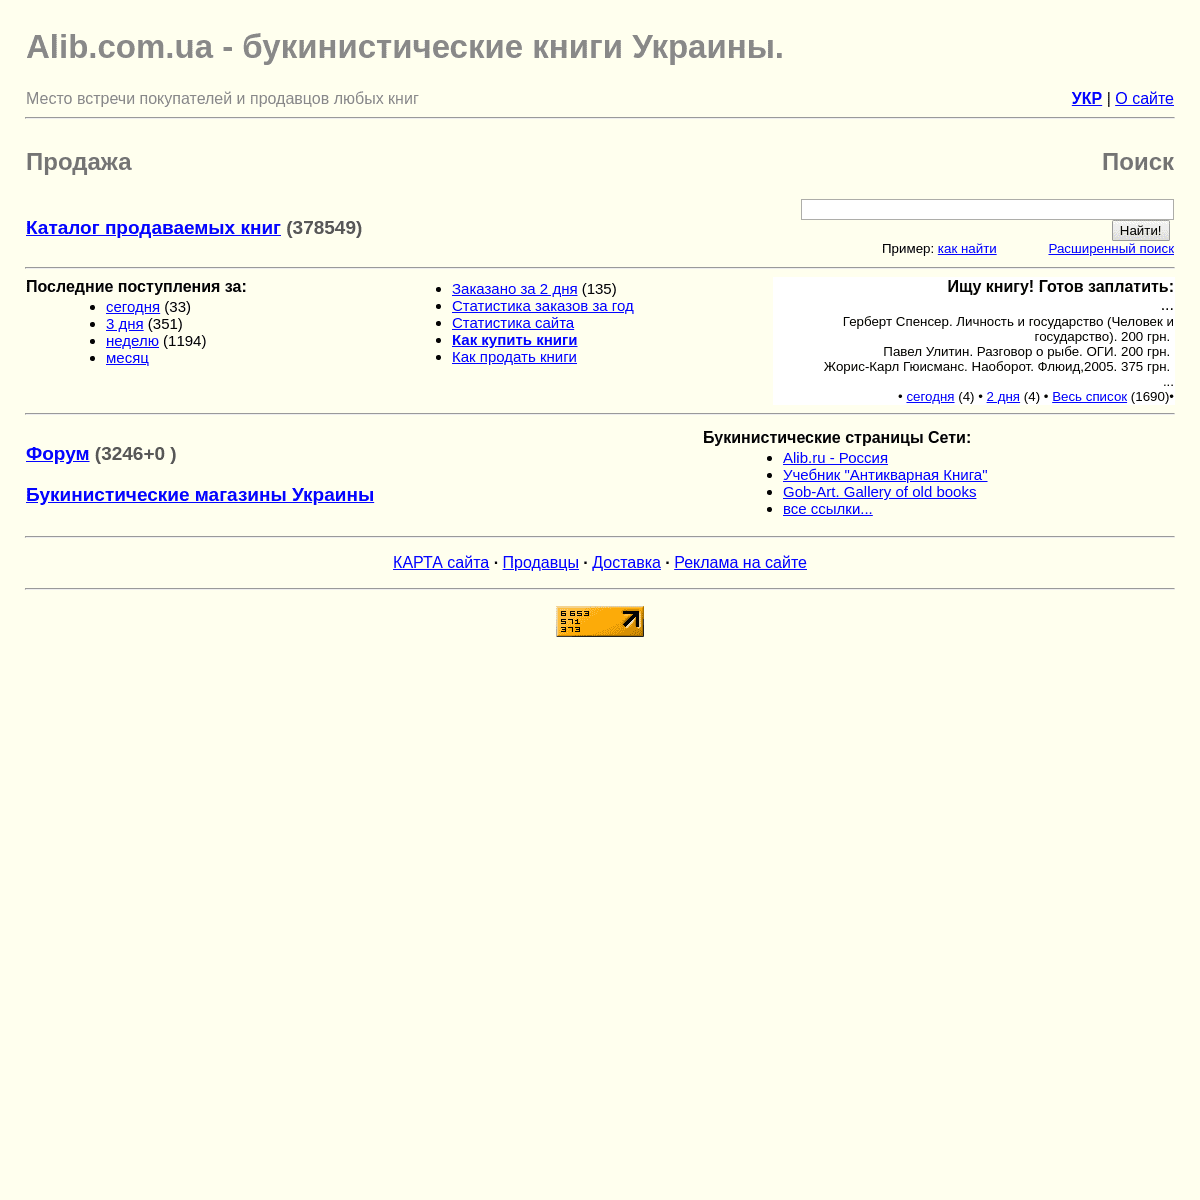 A complete backup of alib.com.ua